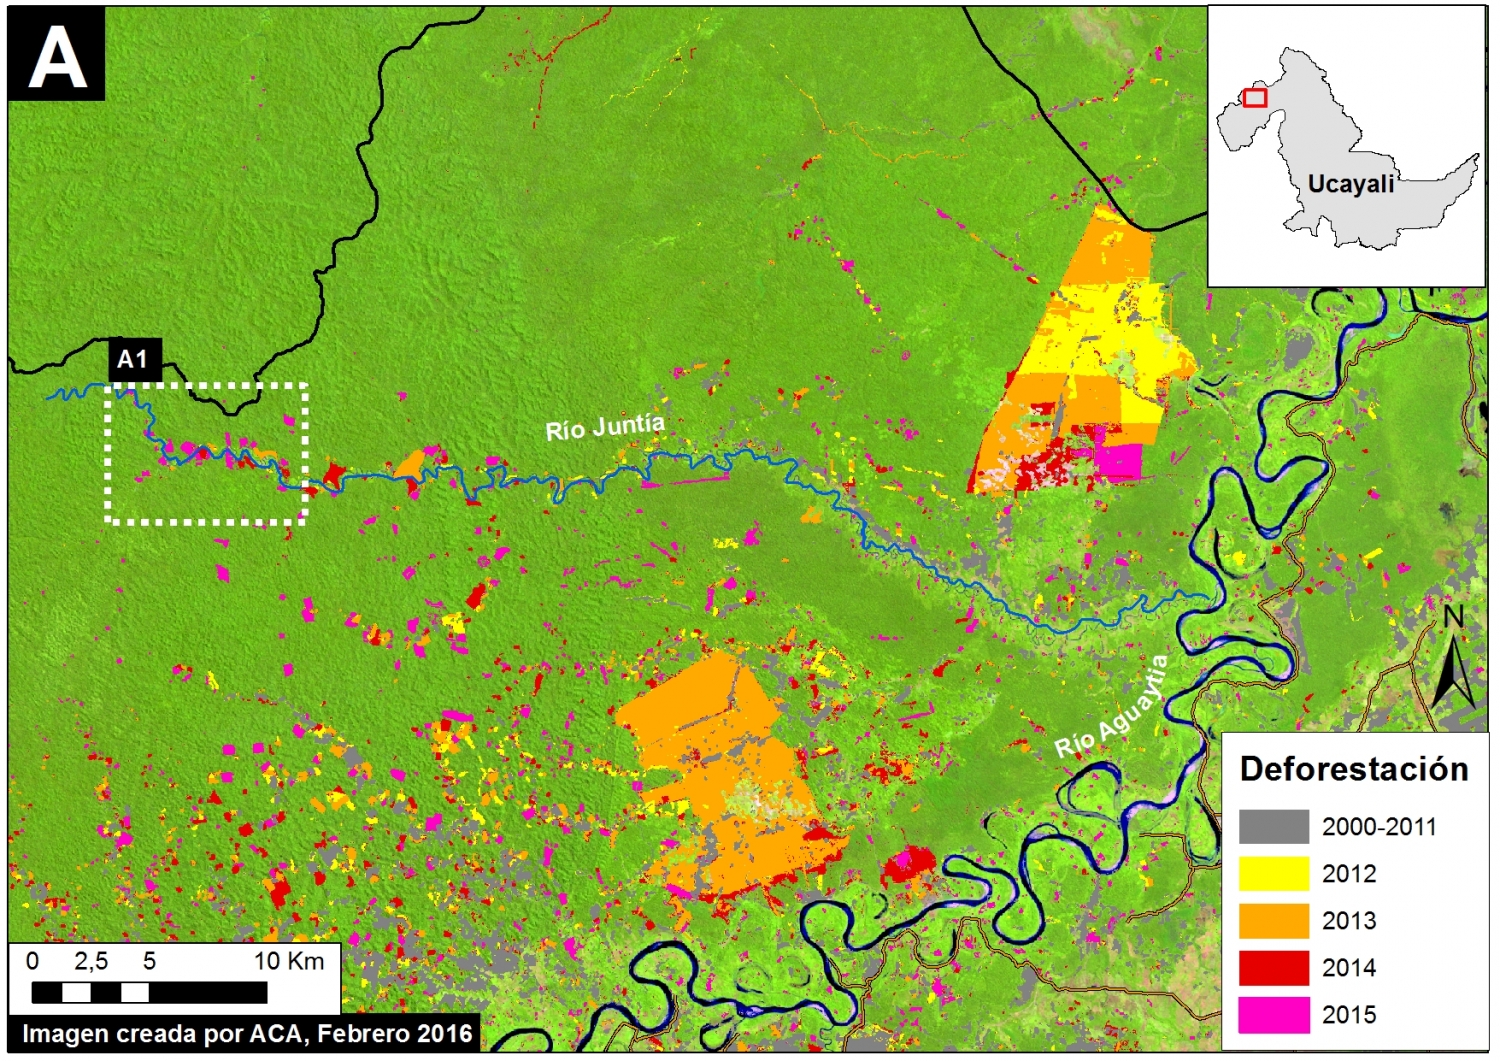 Image Xb. 2000-15 deforestation for area in Inset A. Data: Hansen et al 2016, ERL, PNCB/MINAM, Hansen/UMD/Google/USGS/NASA.